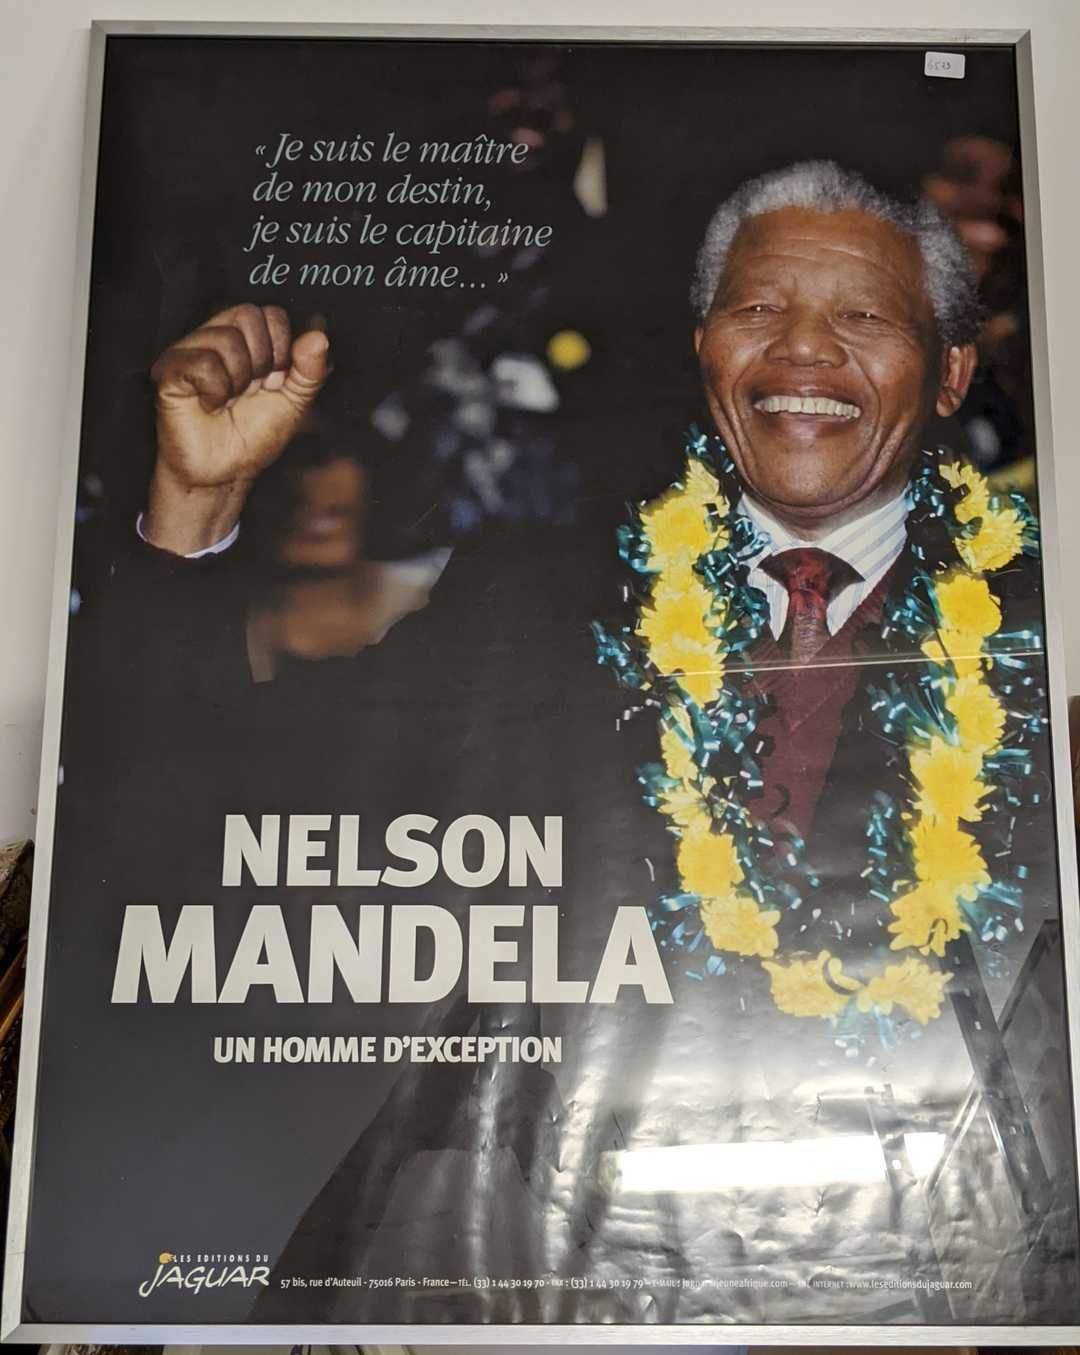 Null Cartel que representa "Nelson MANDELA un hombre excepcional".

79 x 59 cm